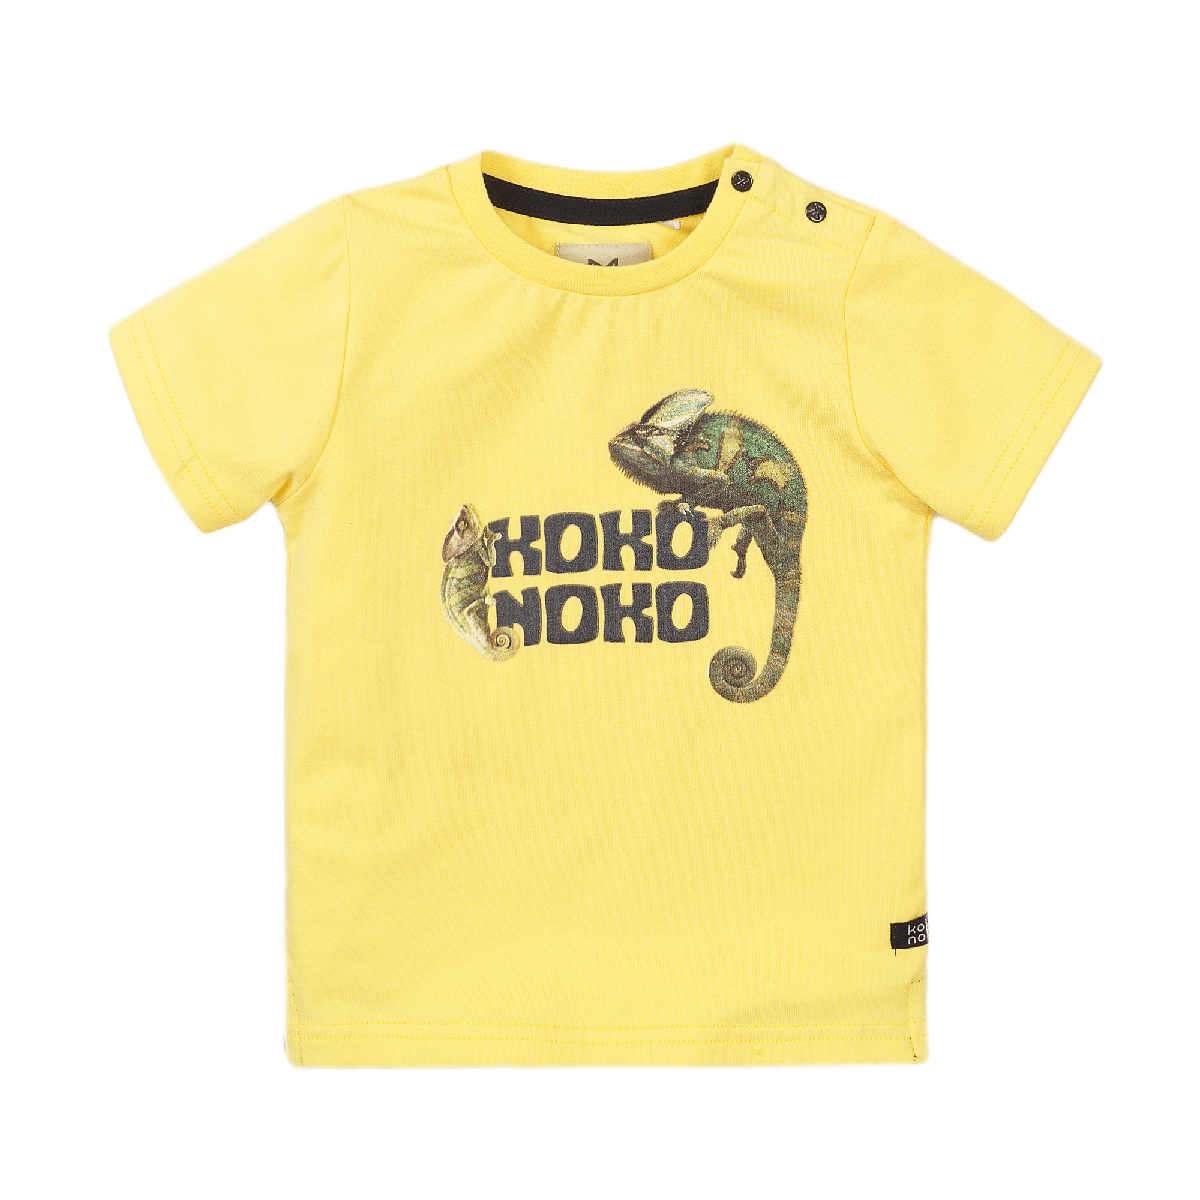 Koko Noko T-shirt chameleon